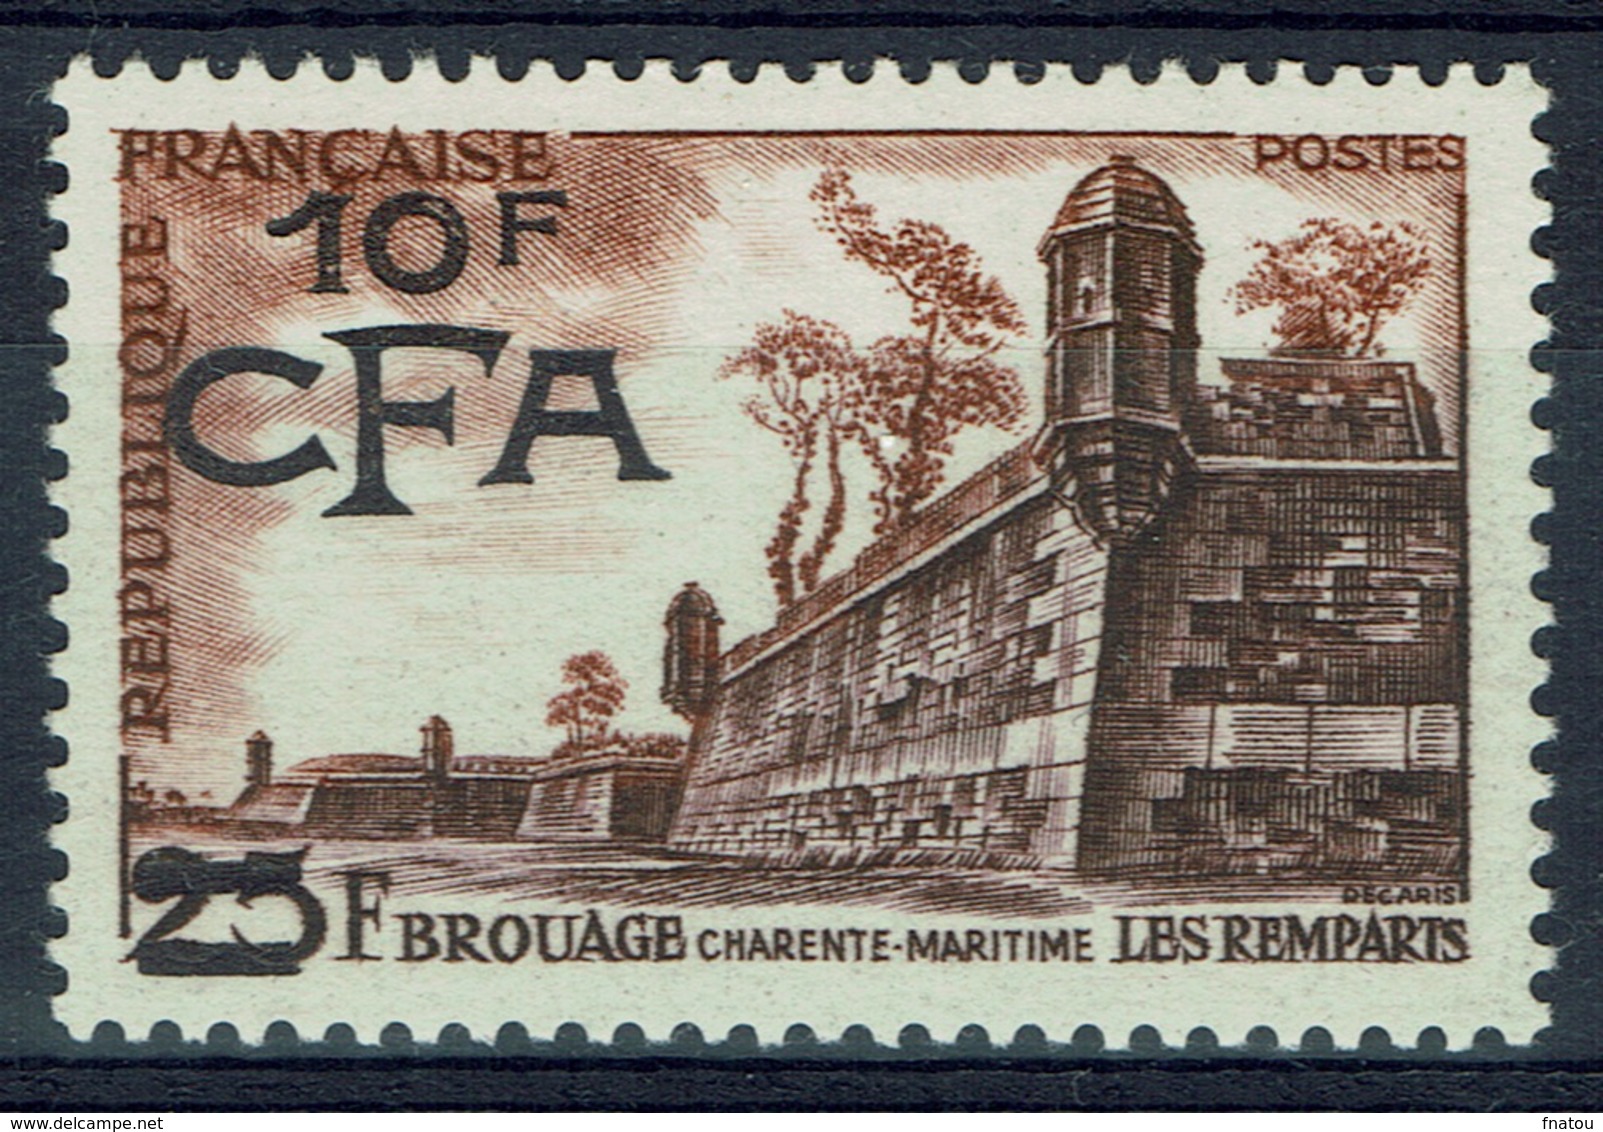 Réunion Island, "Brouage", French Stamp Overprint, 1955, MNH VF - Neufs